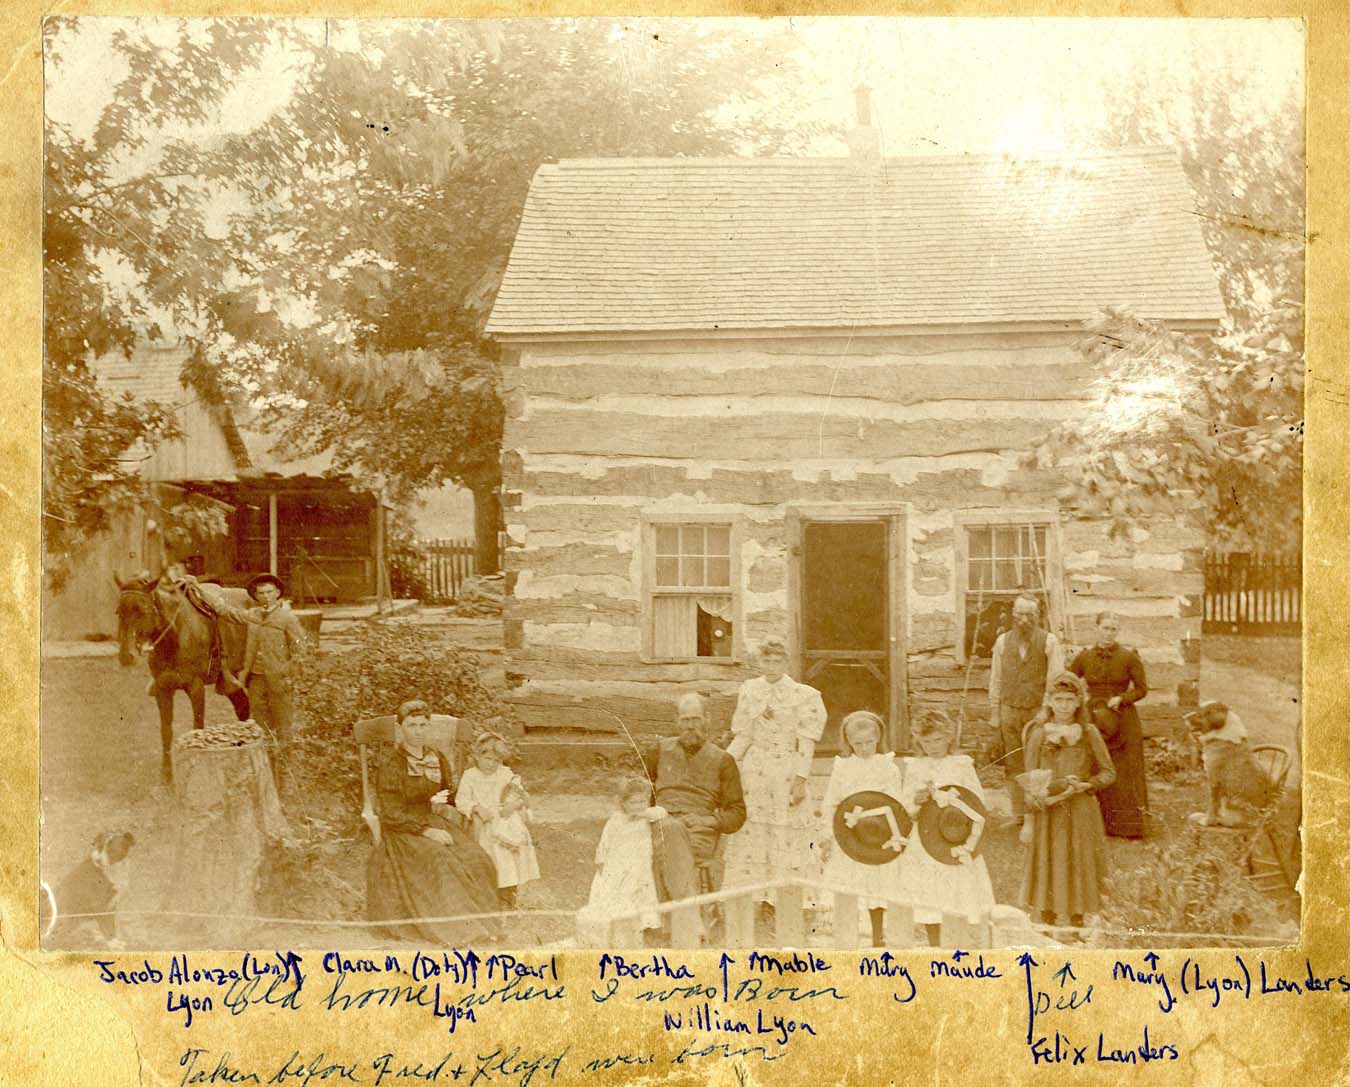 Lyon Family on farm - summer 1893